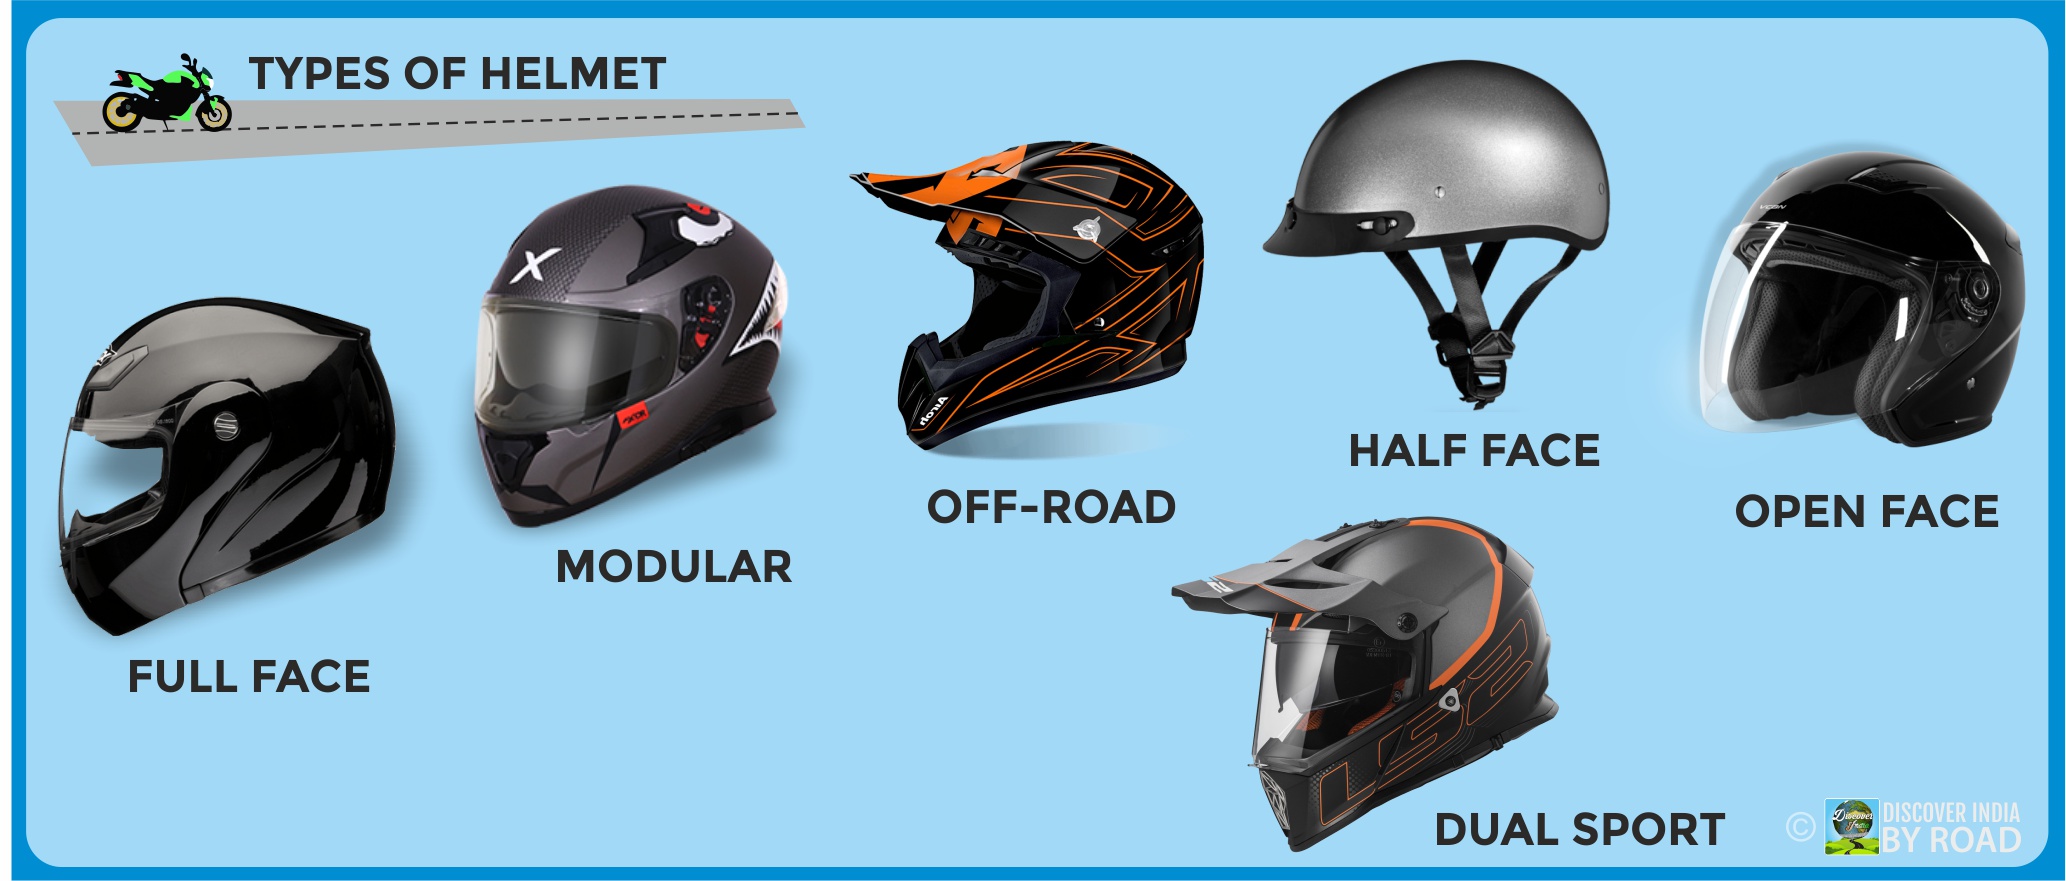 Types of Helmet